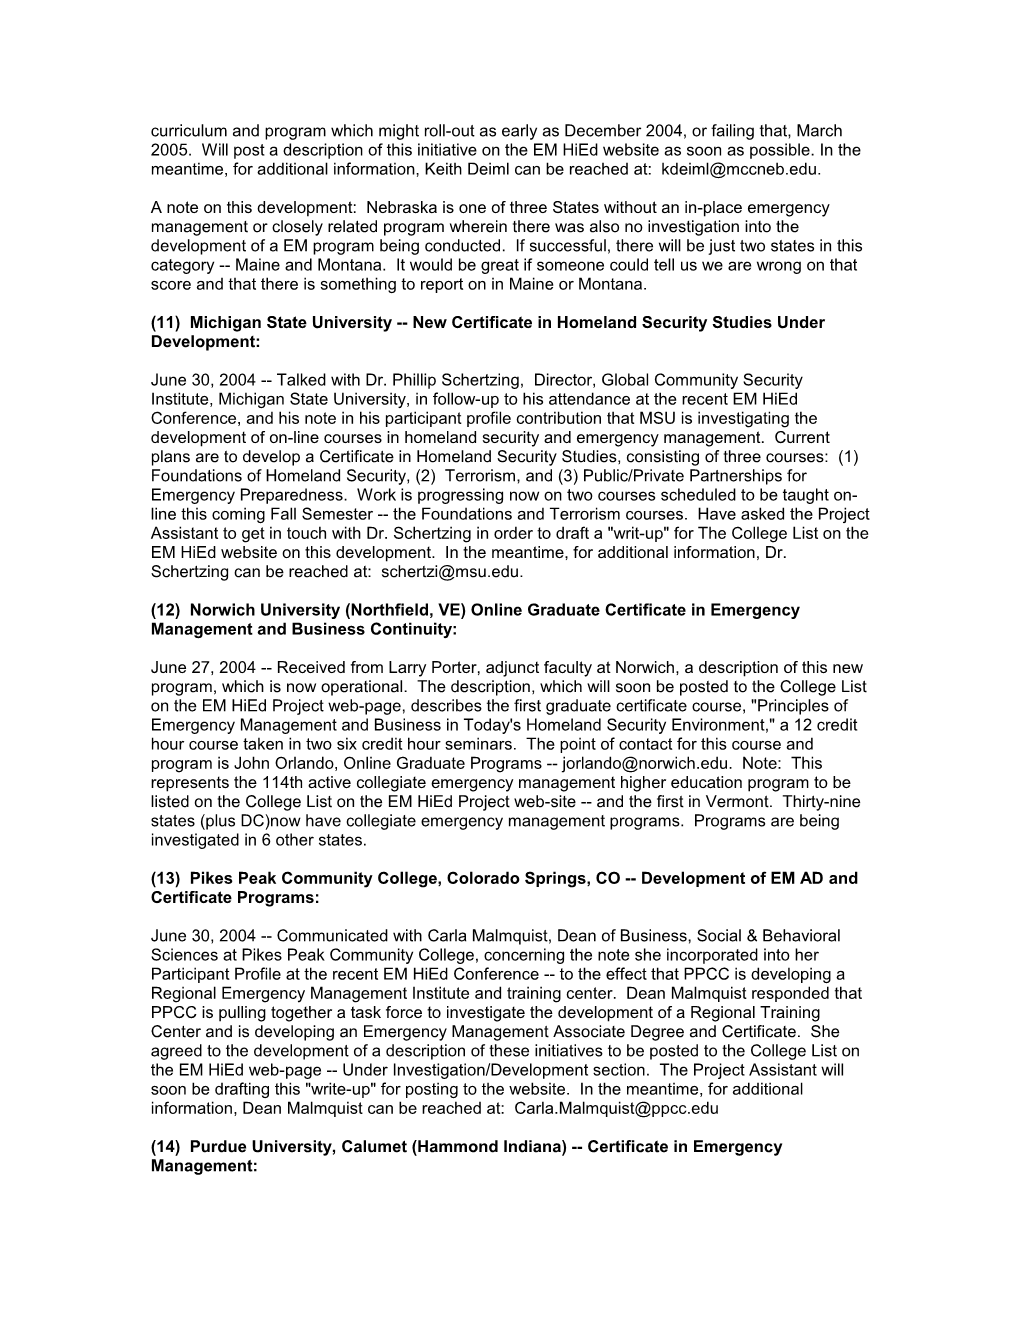 June 26-July 2, 2004 FEMA EM Higher Ed Project Activity Report